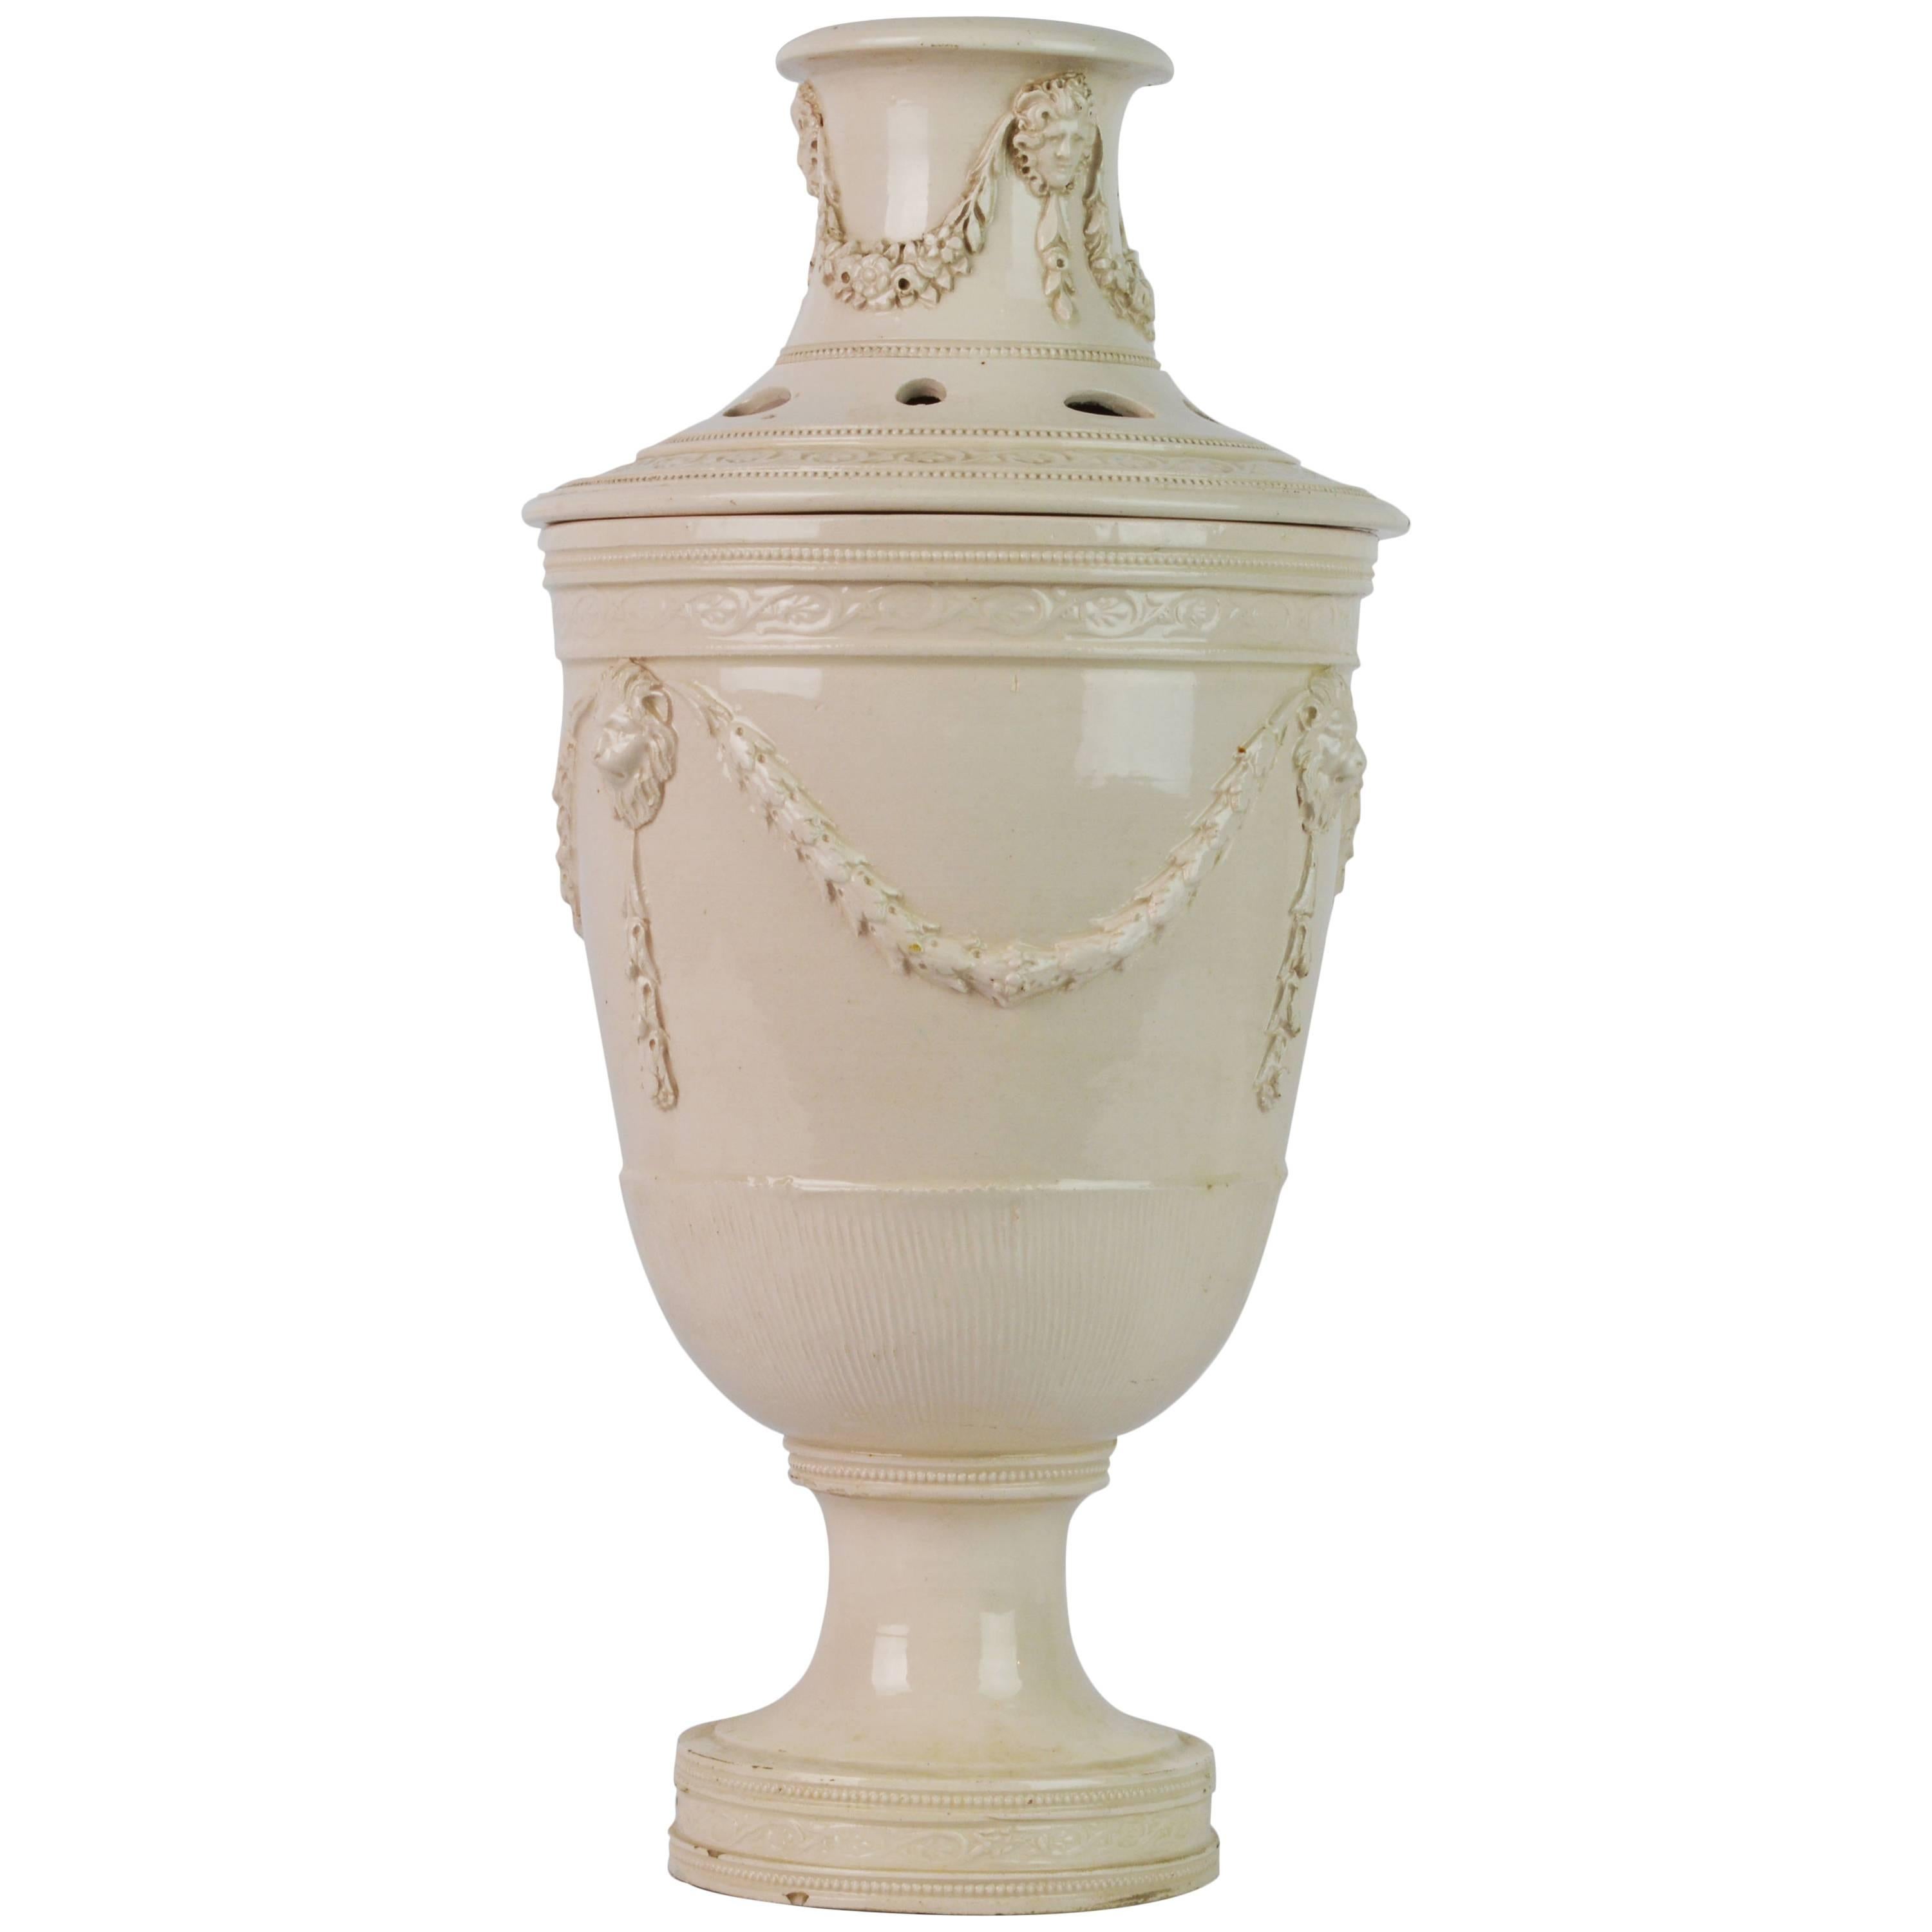 18th Century Leeds Cream Ware Style Covered Potpourri Jar or Urn